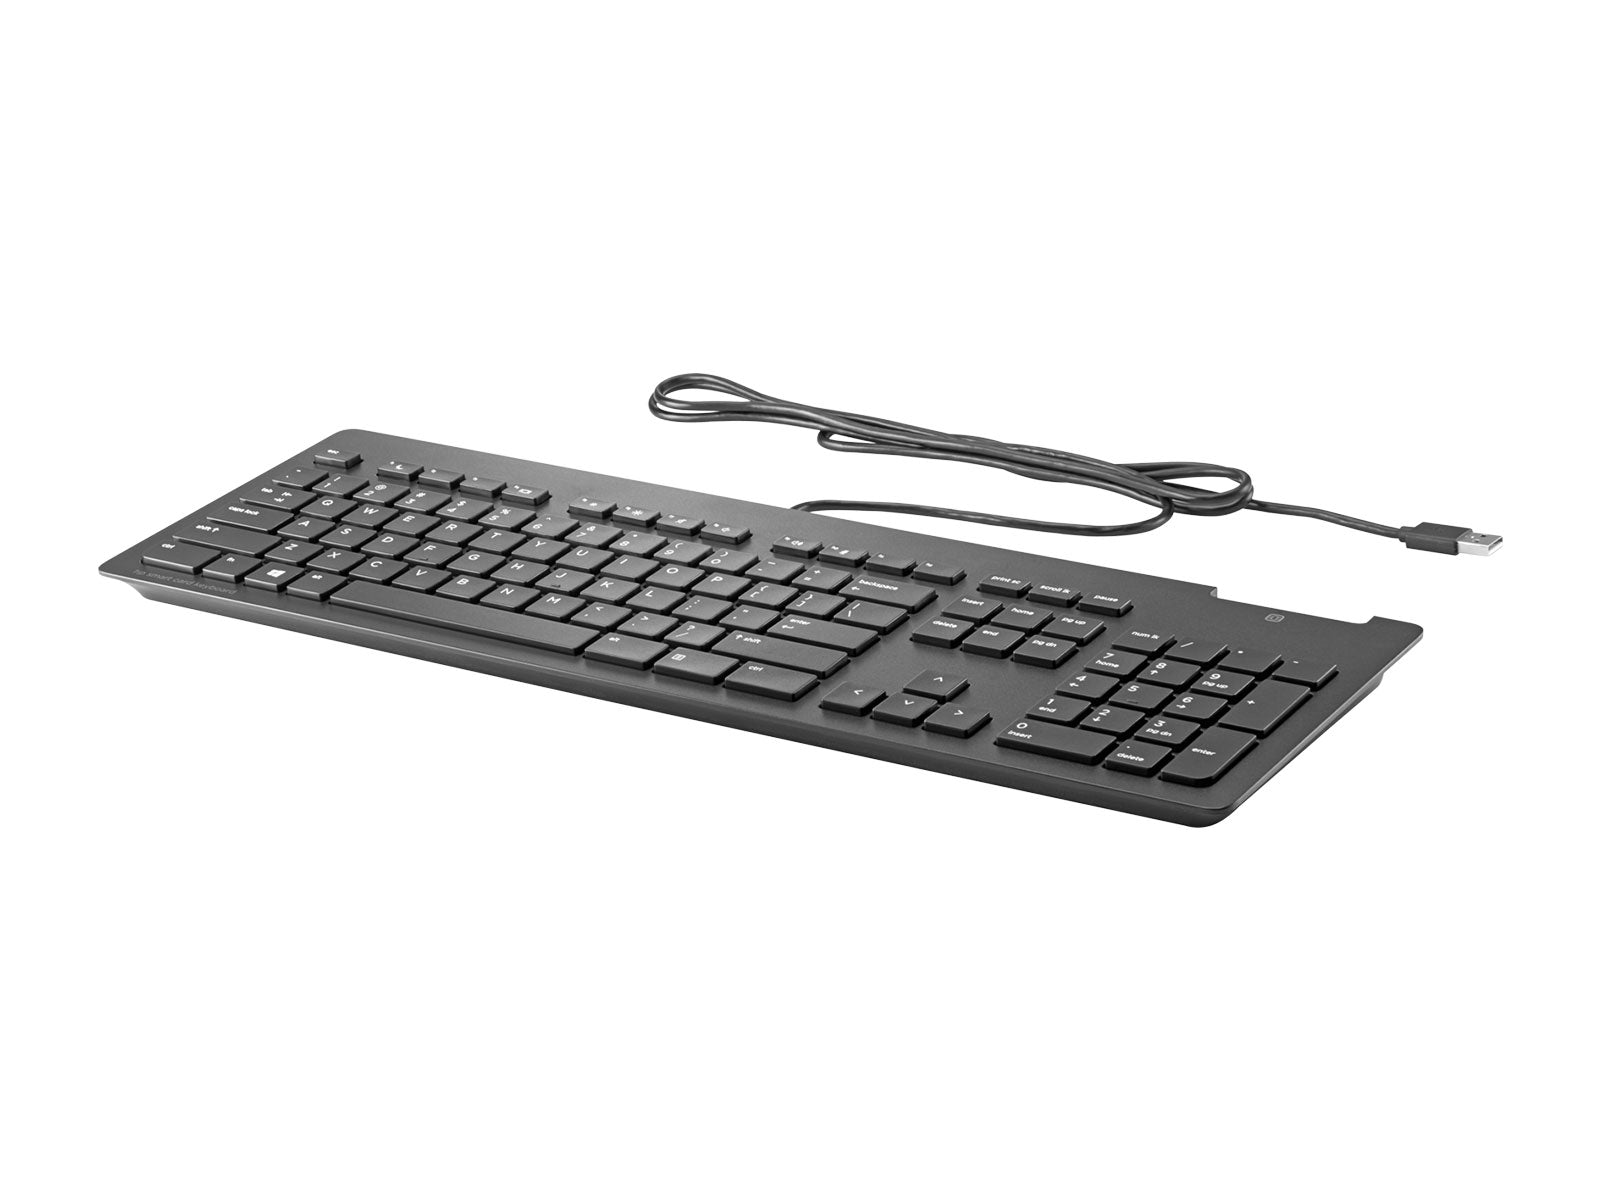 HP USB Slim Wired Keyboard (BTH48AT#ABA) Monitors.com 